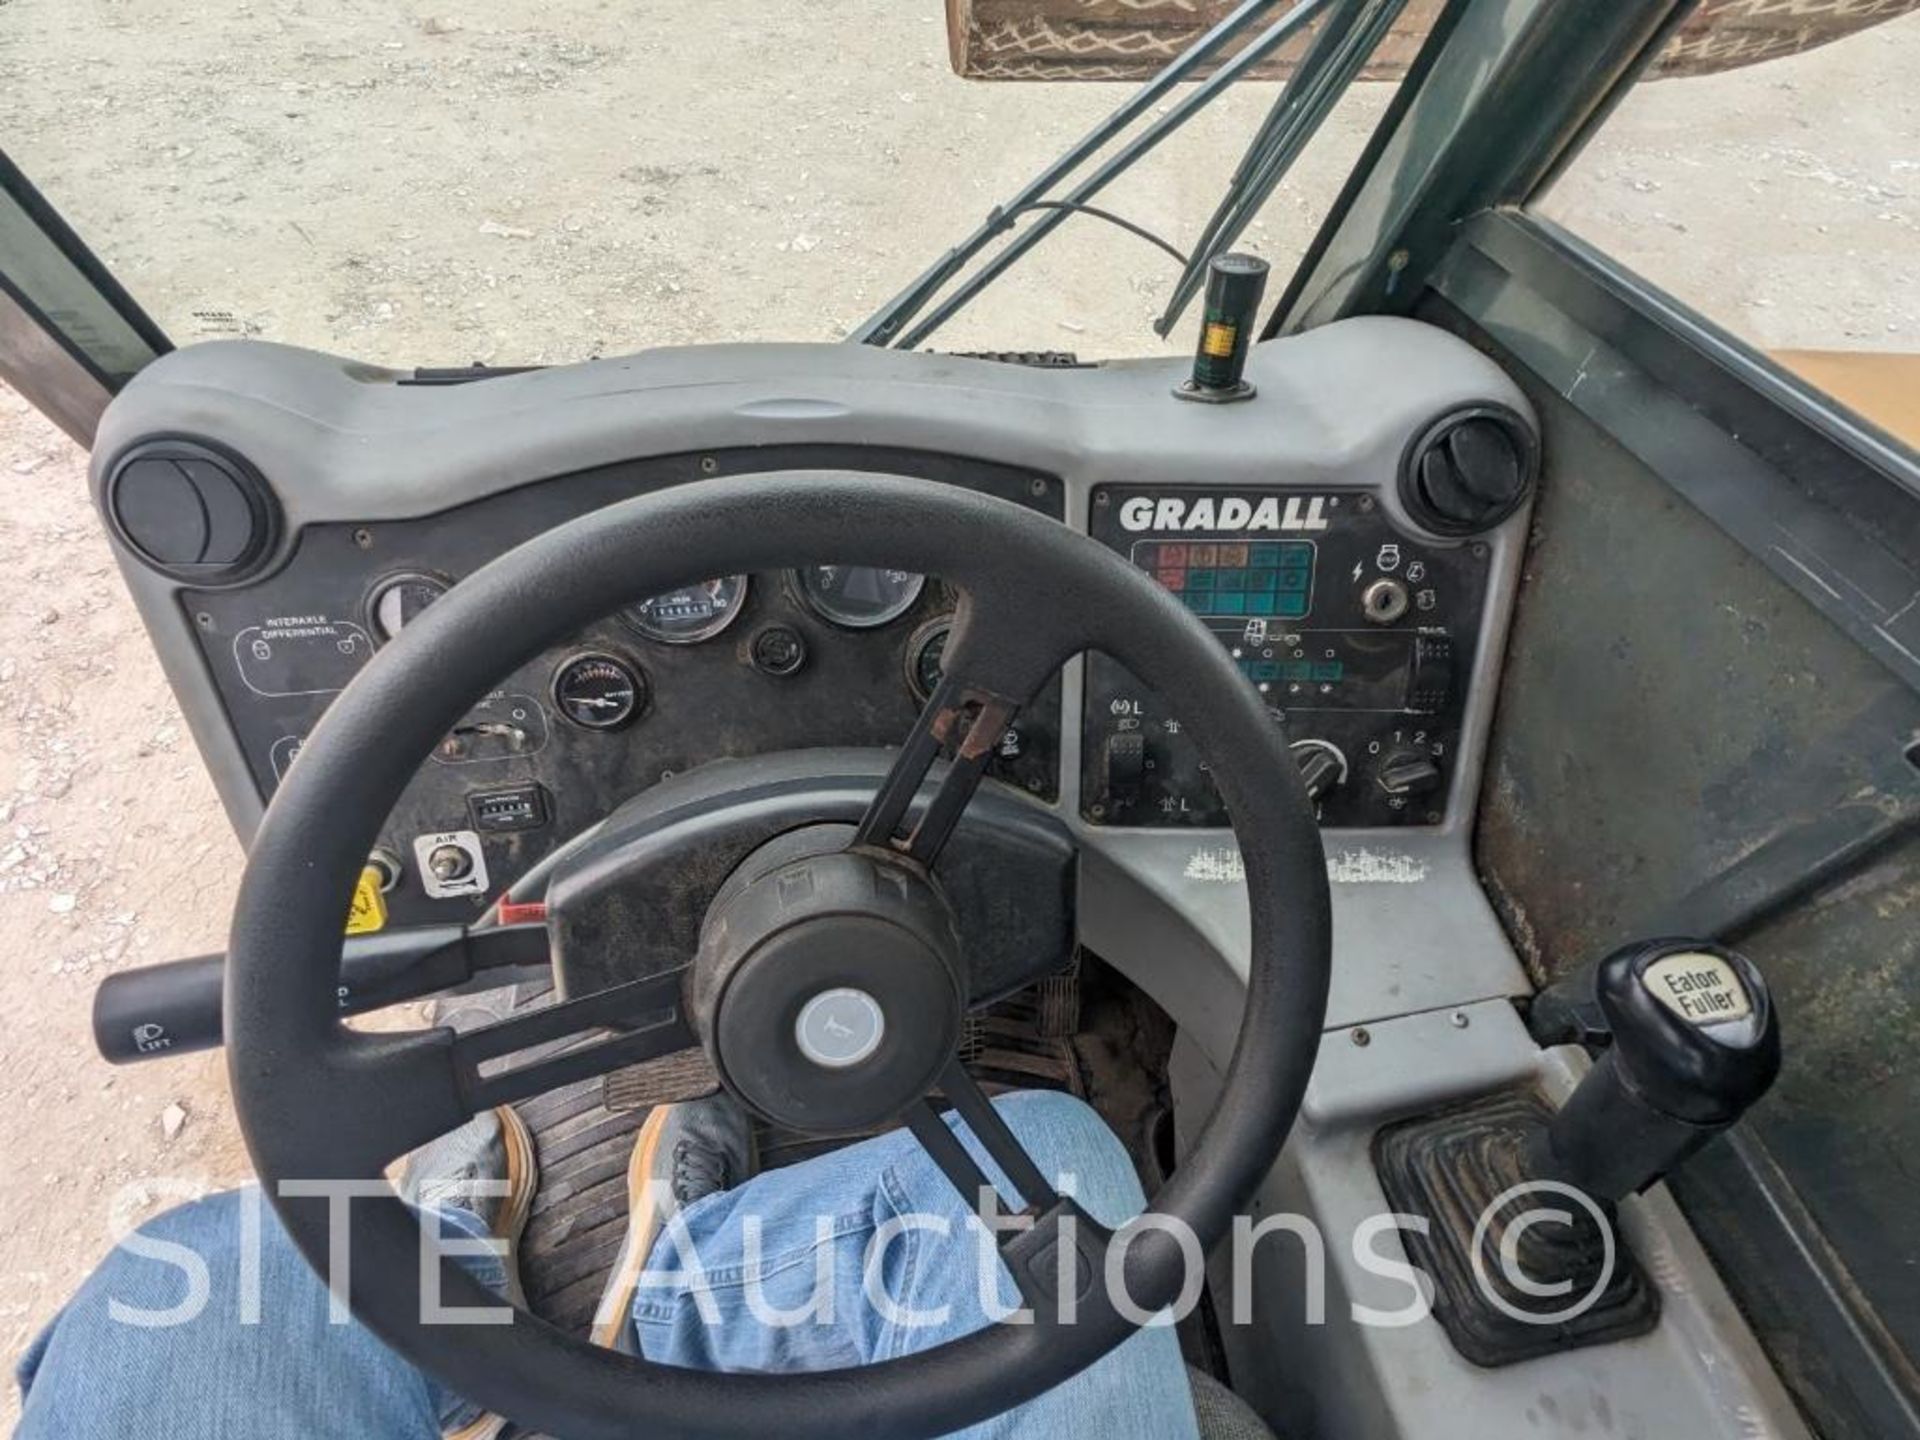 2005 Gradall XL3100 Wheeled Excavator - Image 8 of 18